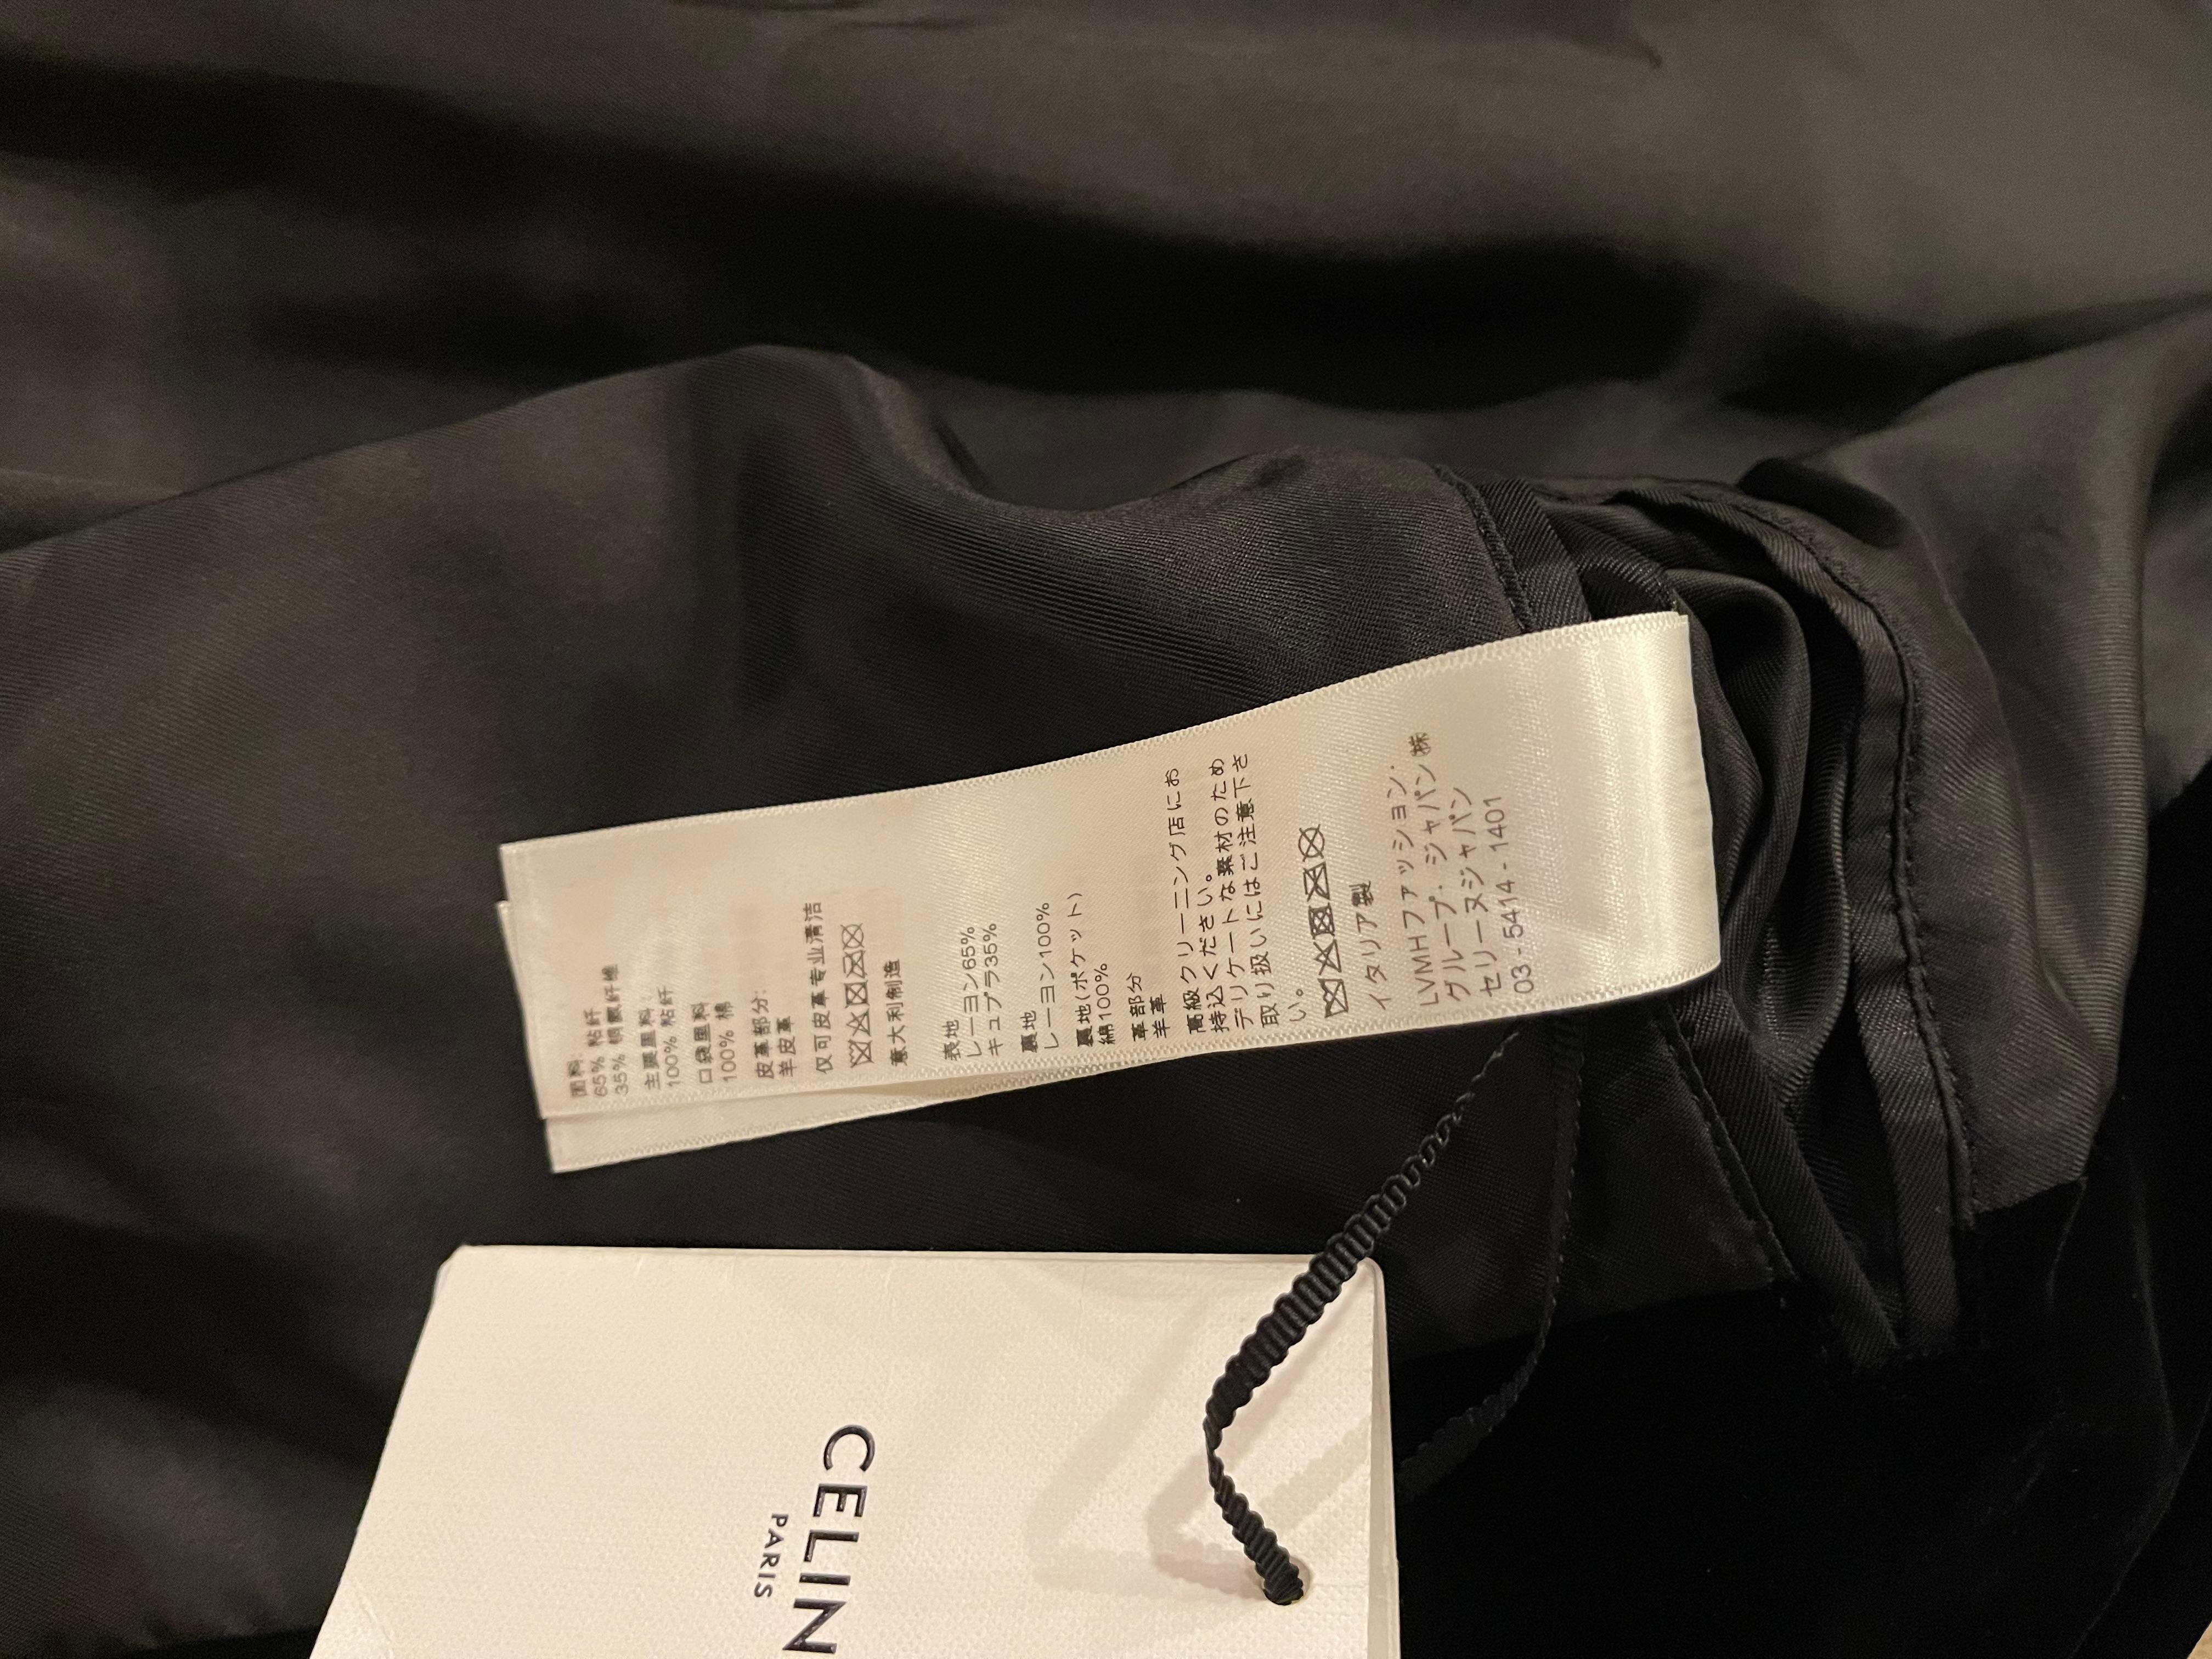 Celine Hedi Slimane Black Velvet Teddy Varsity Jacket RARE size 48 For Sale 13